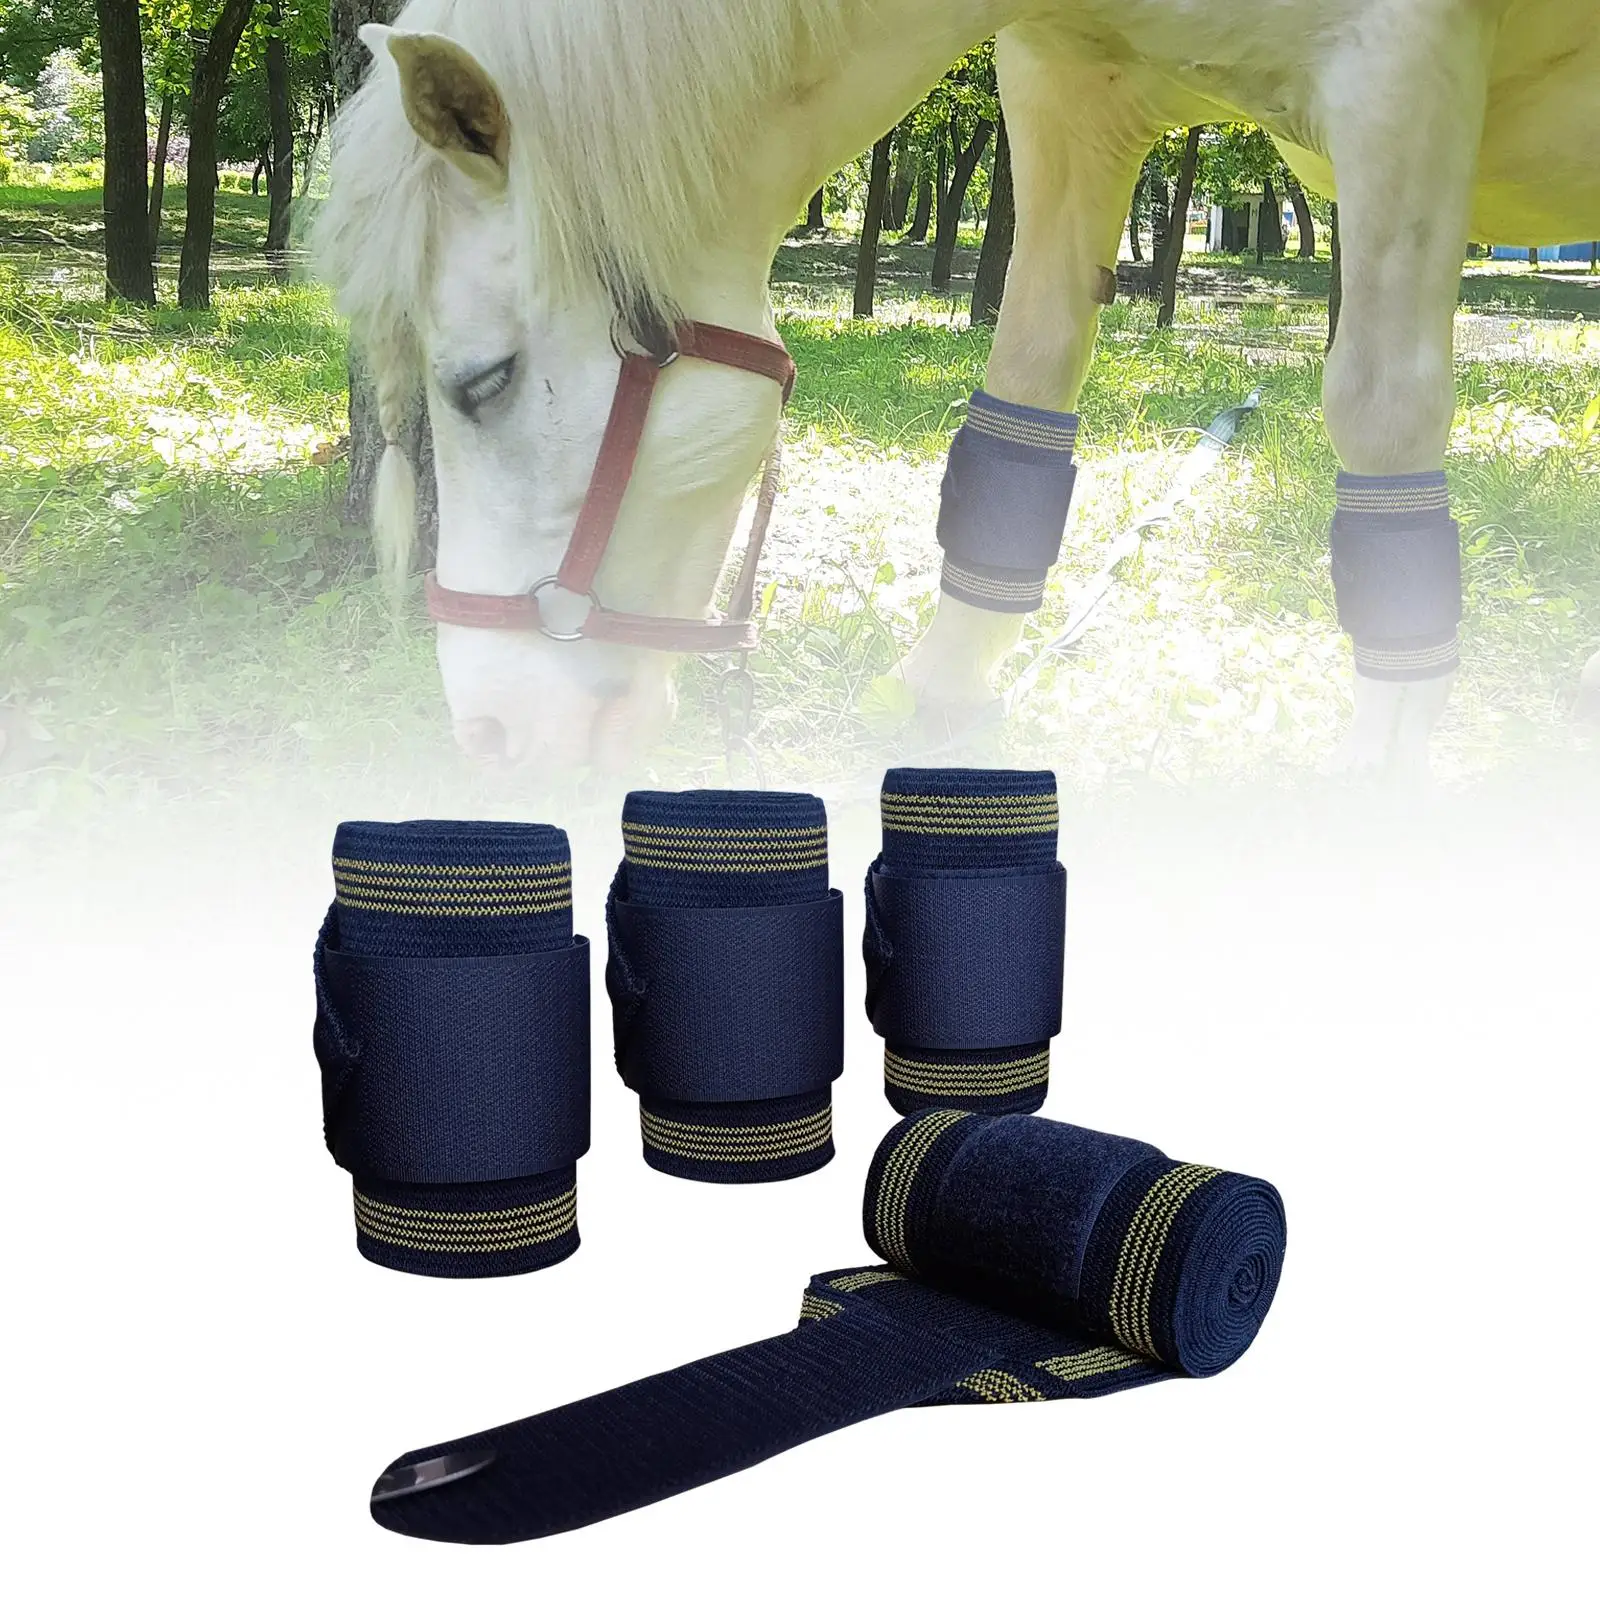 4 Pieces Horse Leg Wraps Thick Leg Guards for Livestock Training Exercising